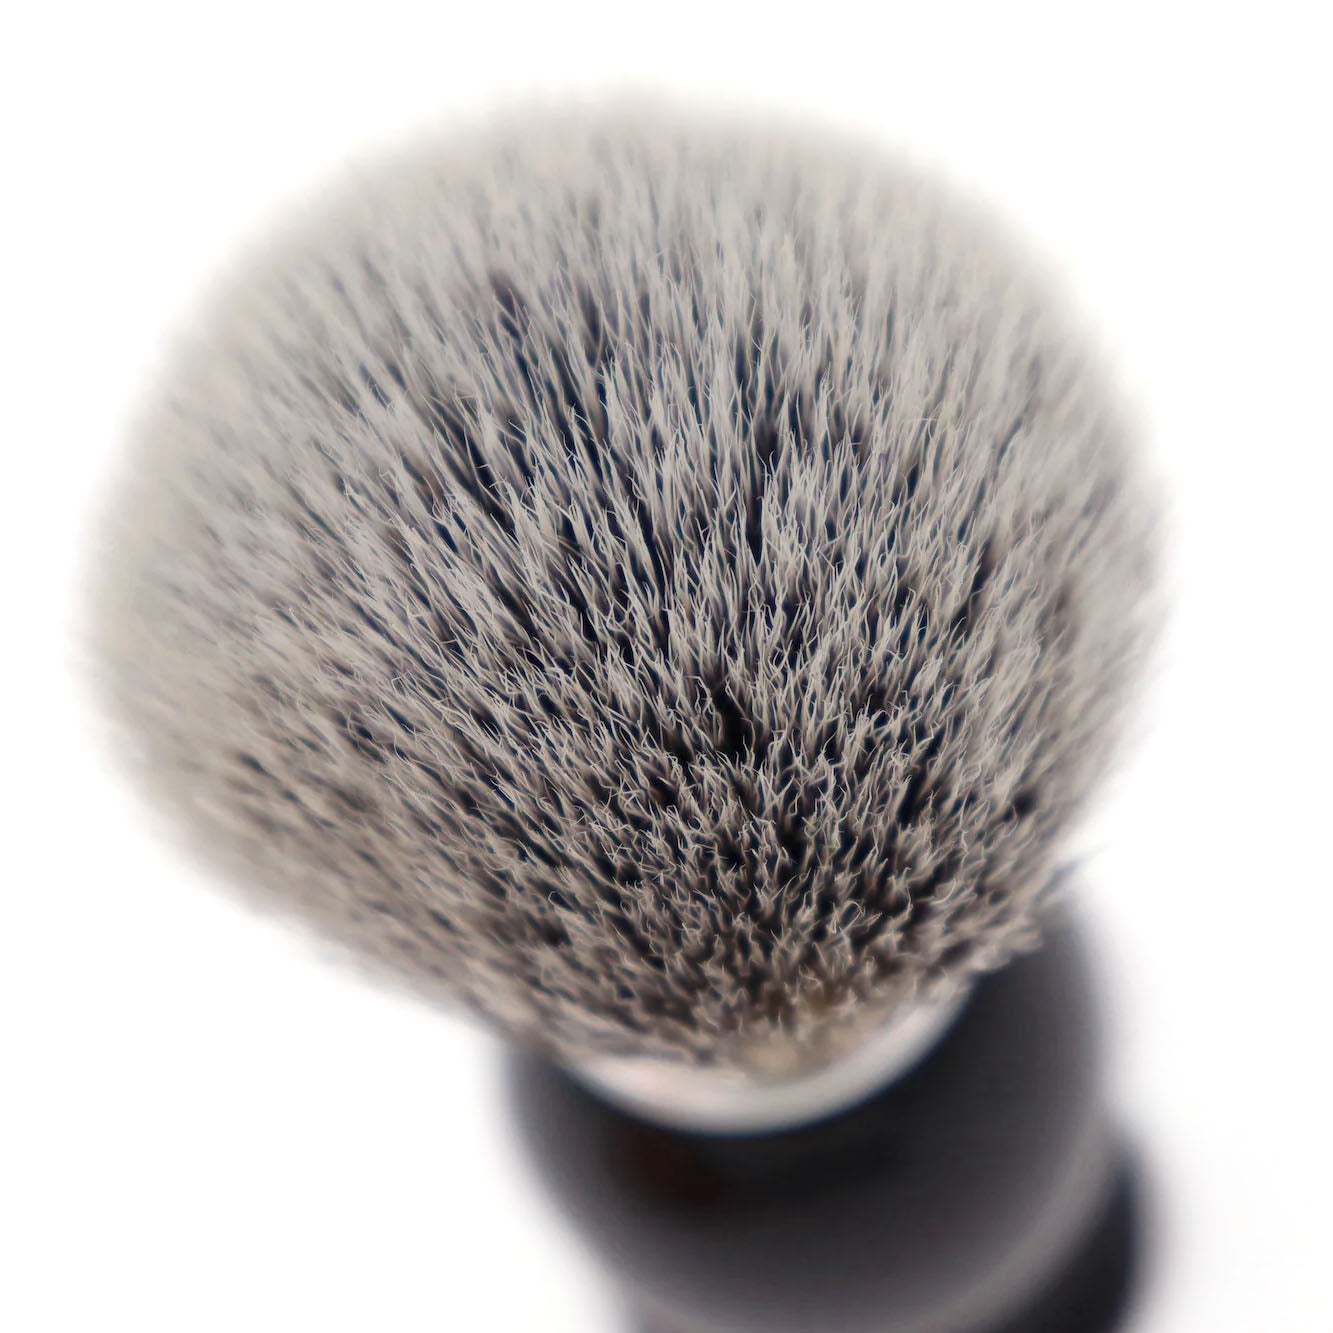 Synthetic Shaving Brush - Black Acrylic Handle by Roché